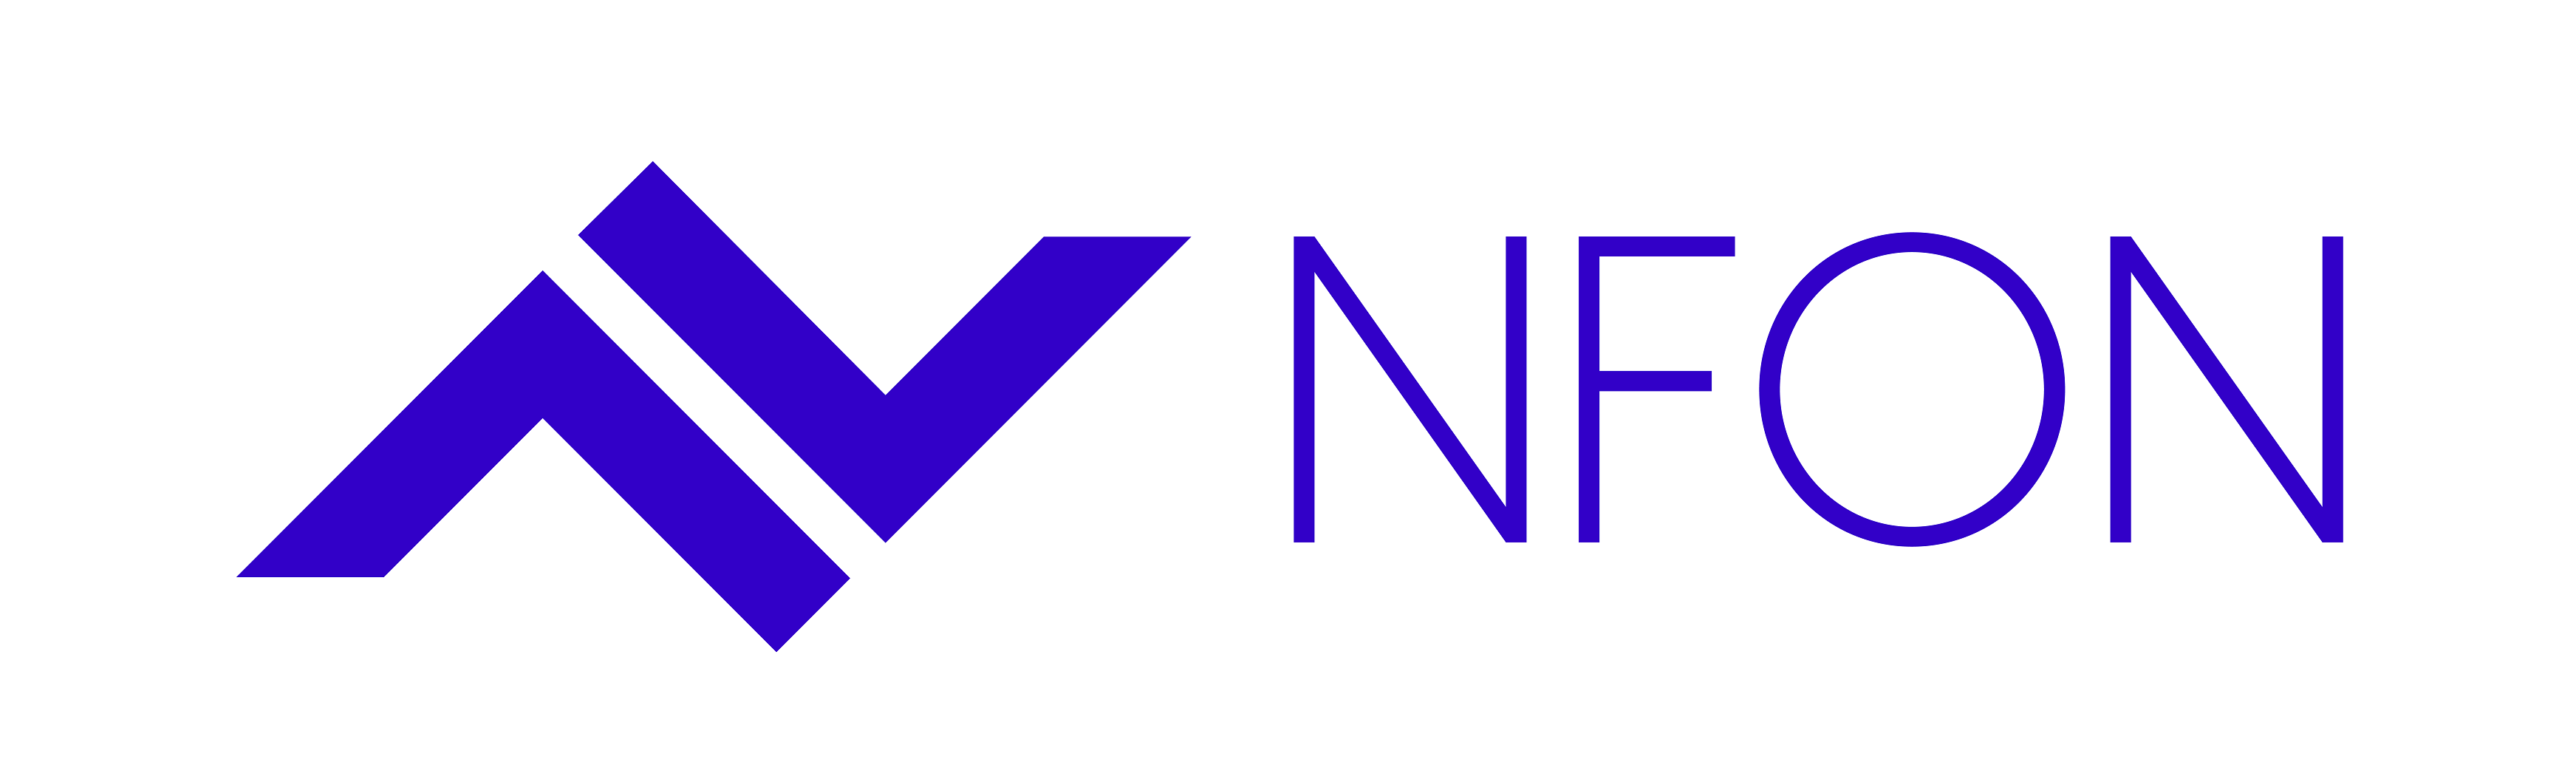 NFON Logo.PNG